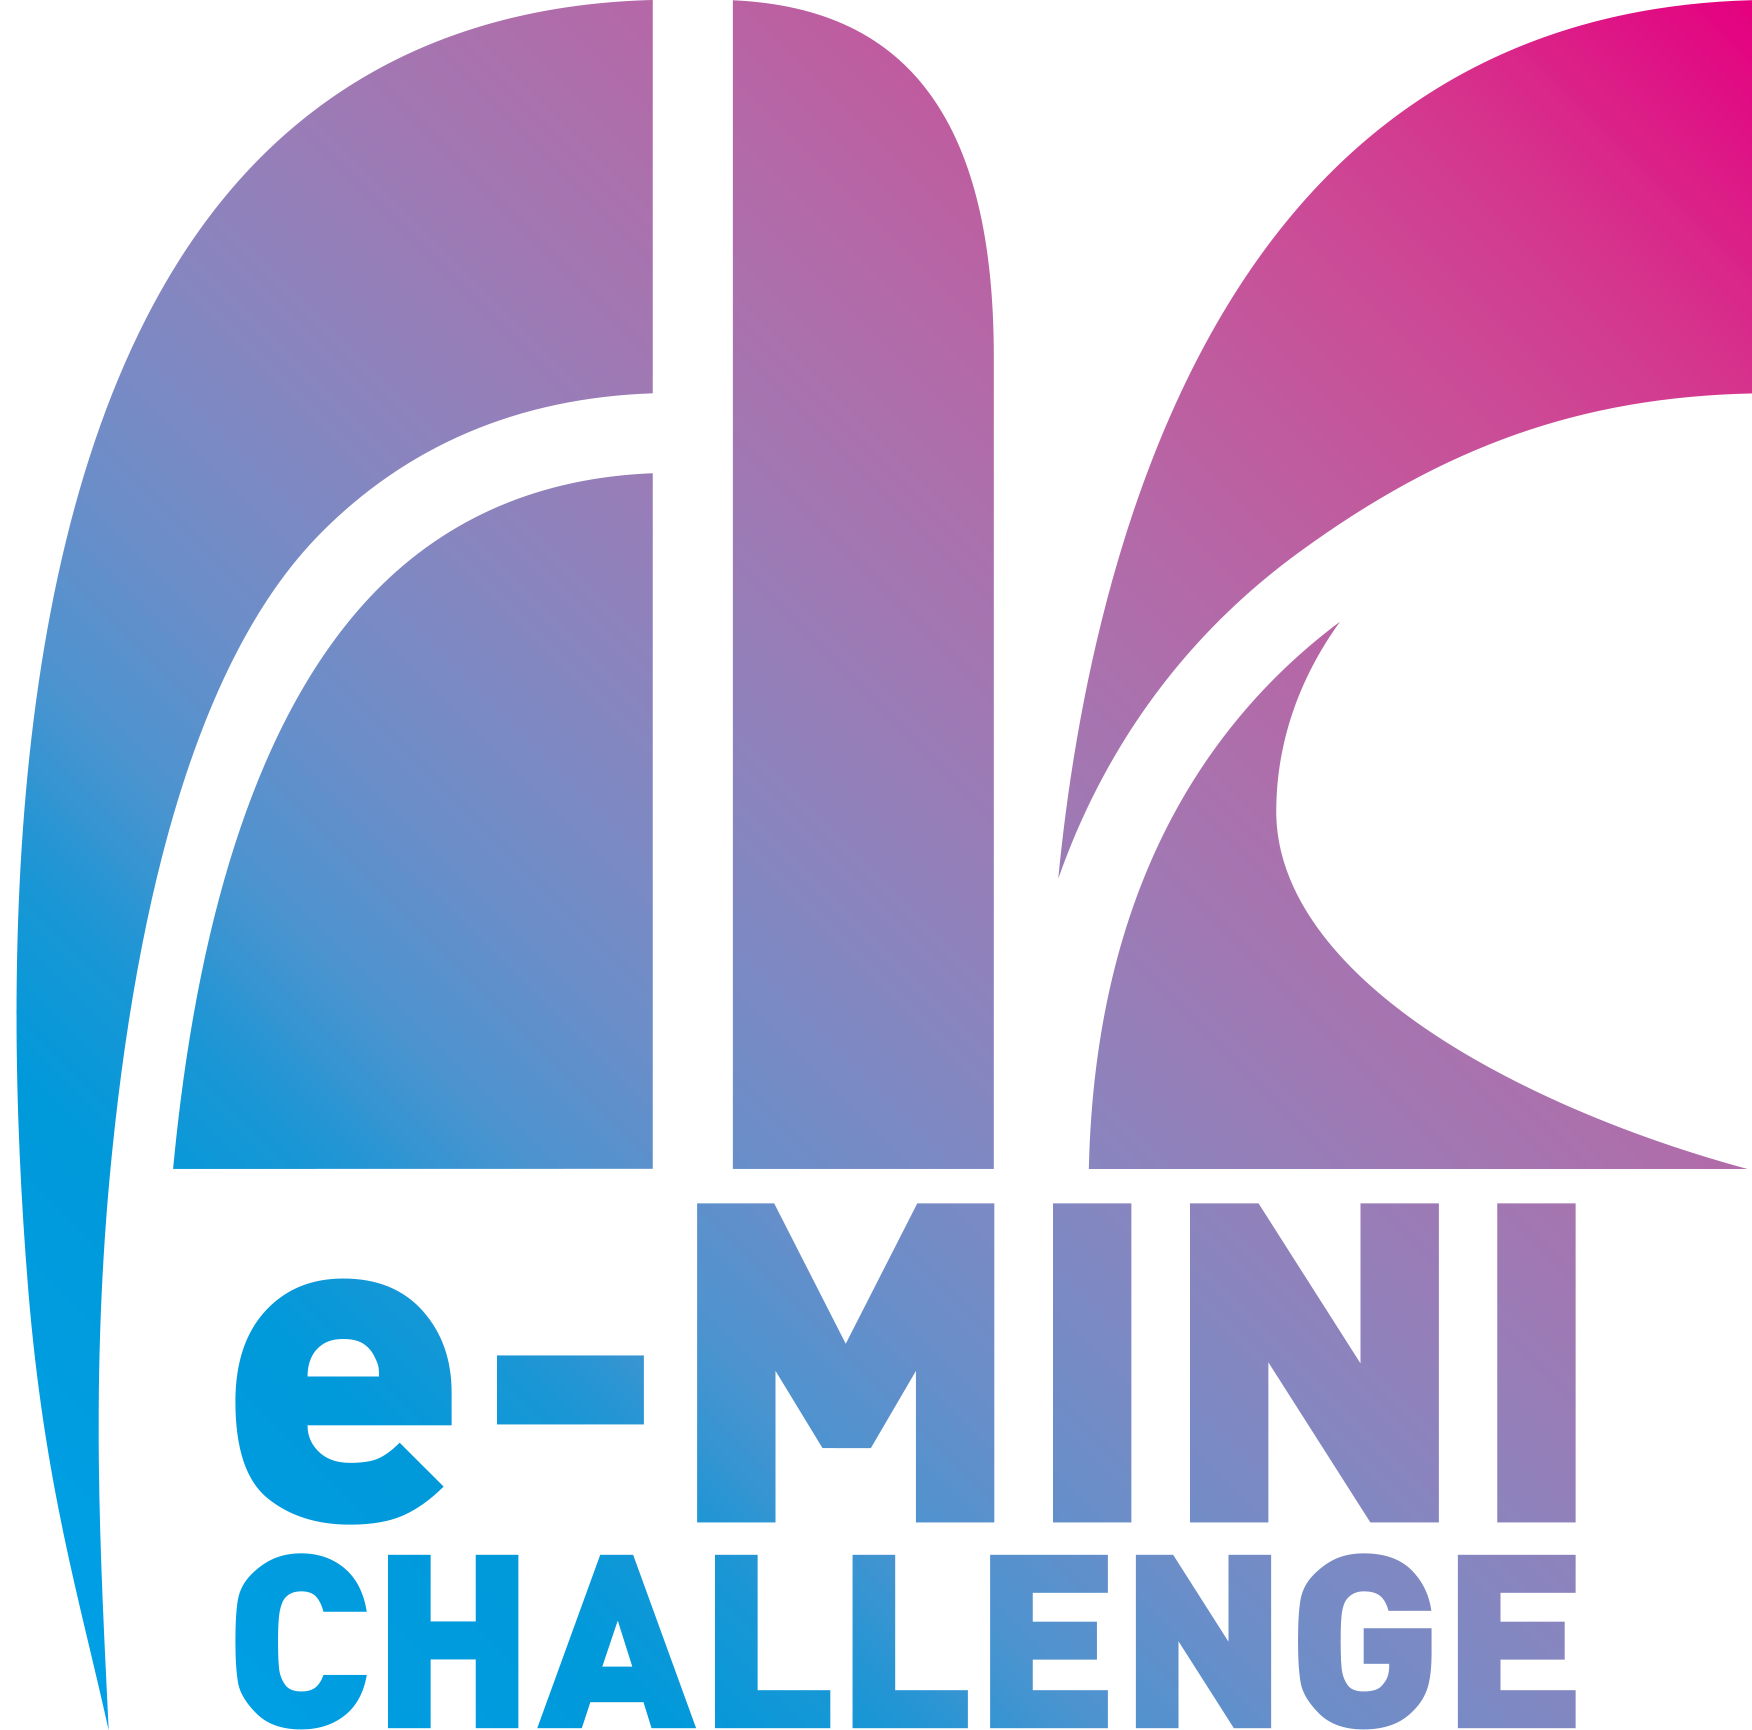 e-MINI CHALLENGE®2023 S1 Rd.3 ポイントランキング公開